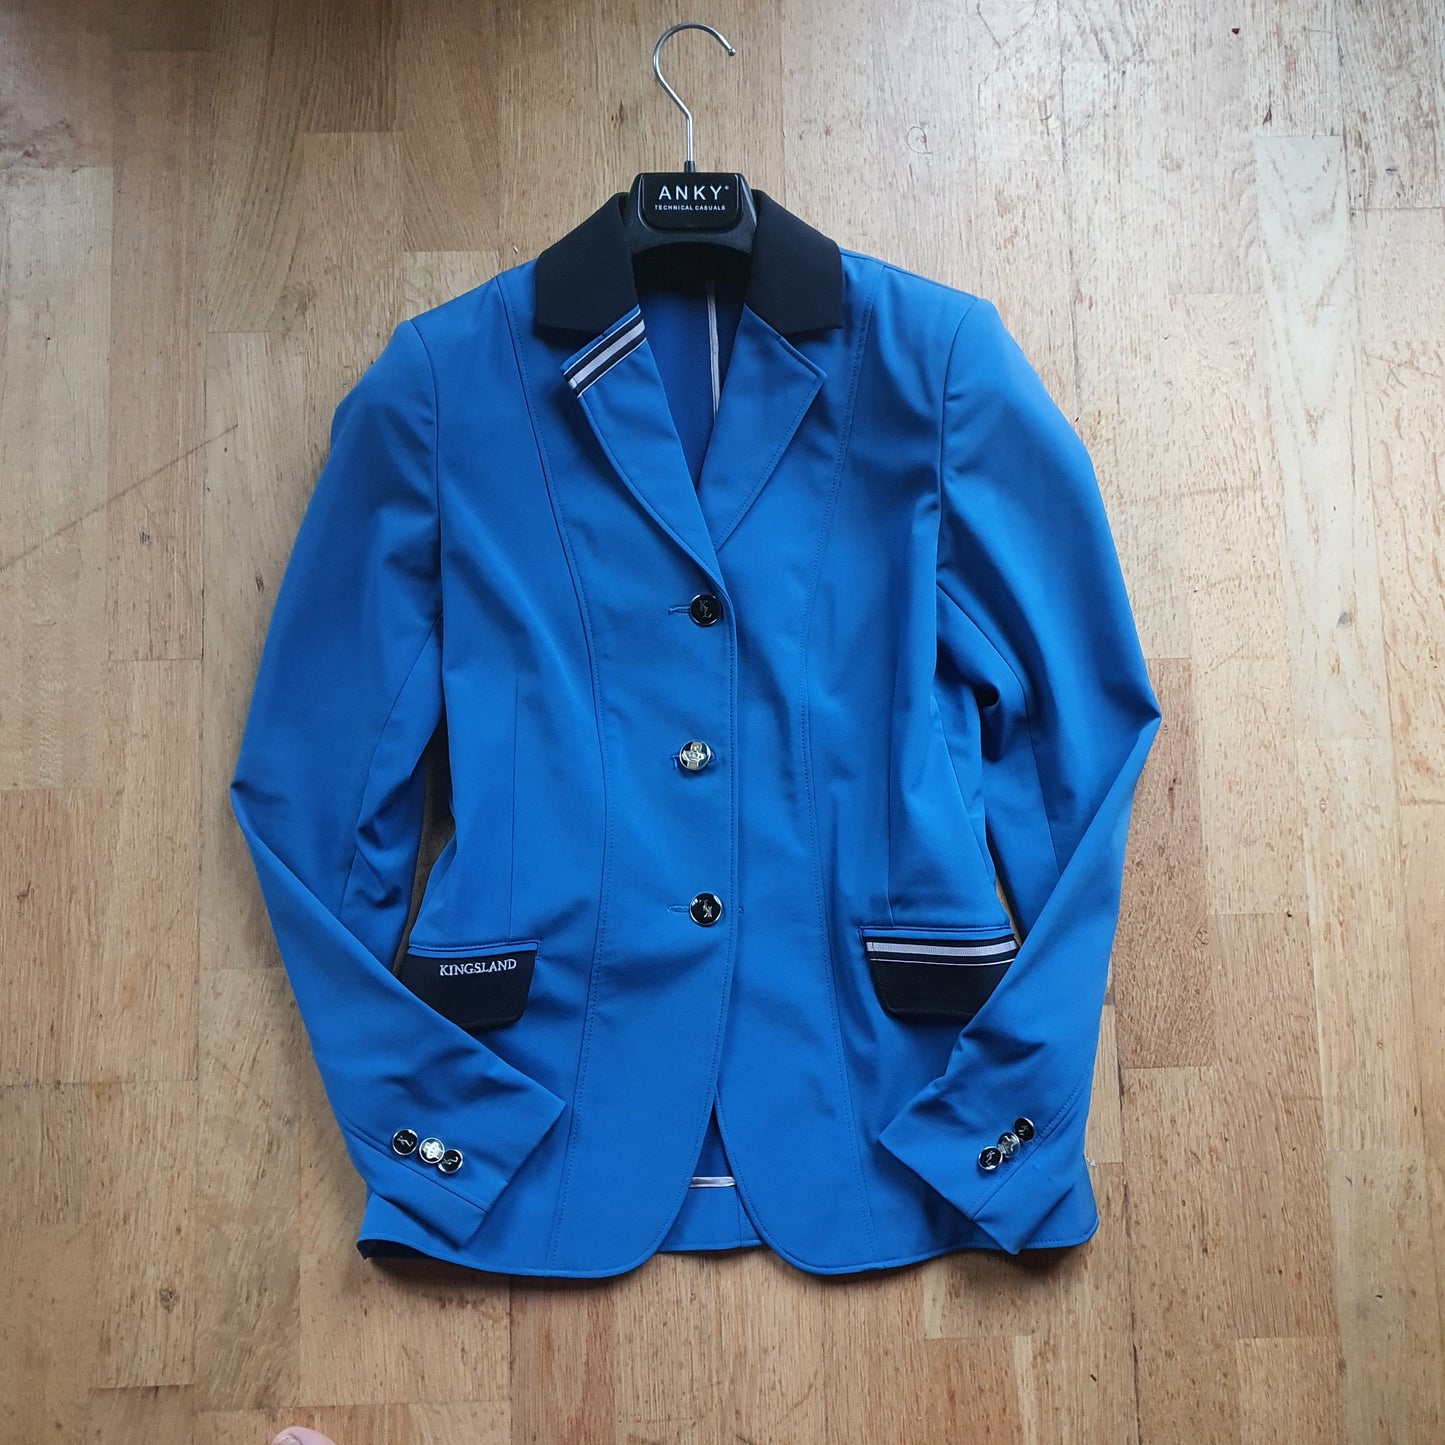 Kingsland sky blue show jacket ladies size 8